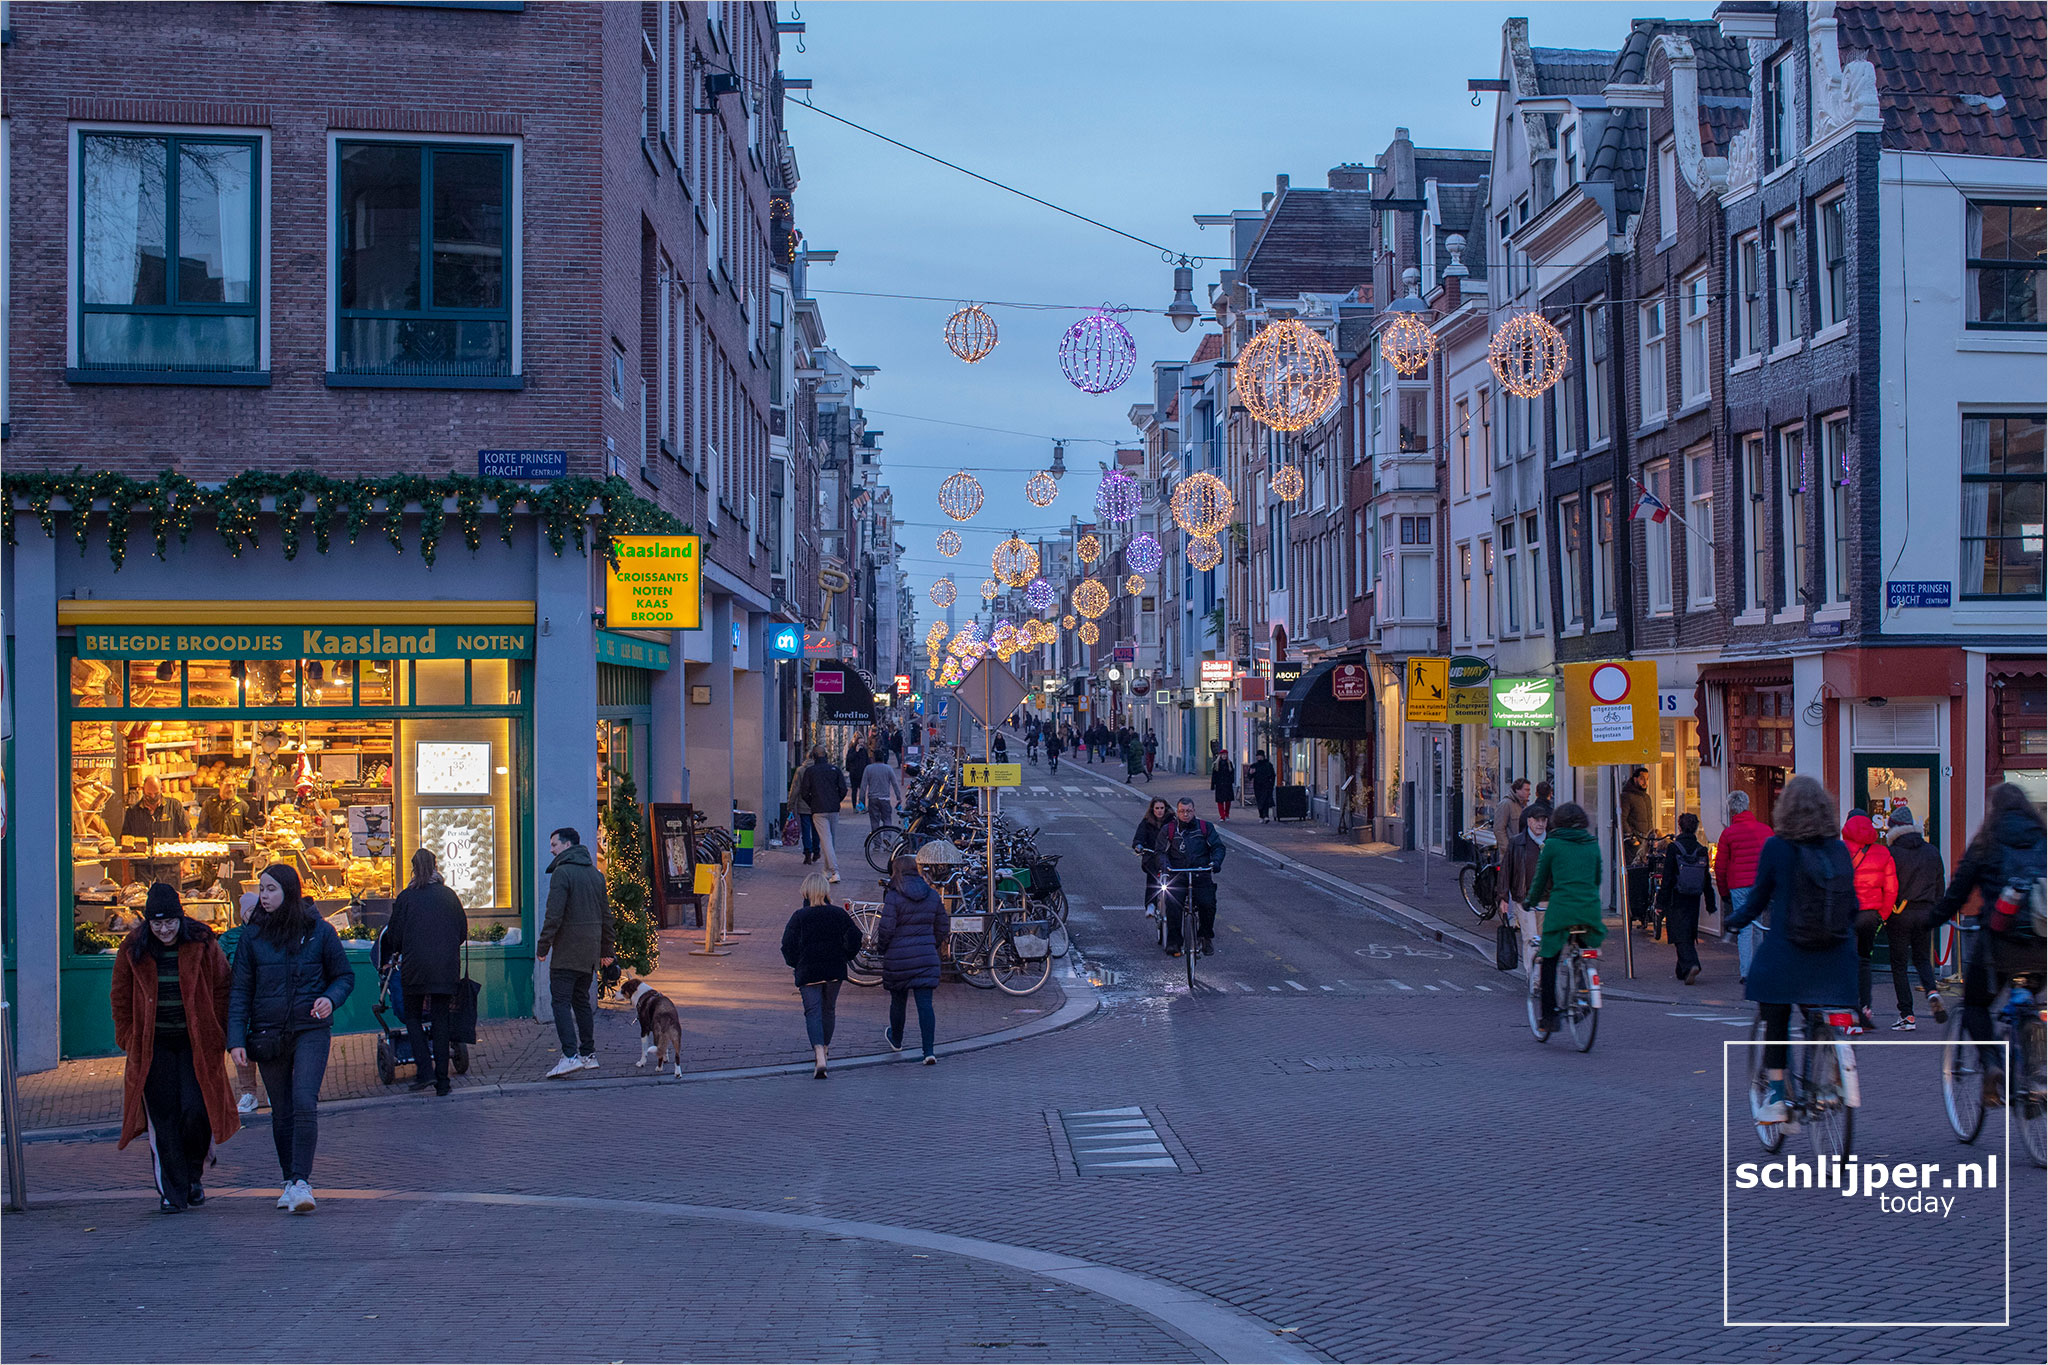 The Netherlands, Amsterdam, 16 december 2020